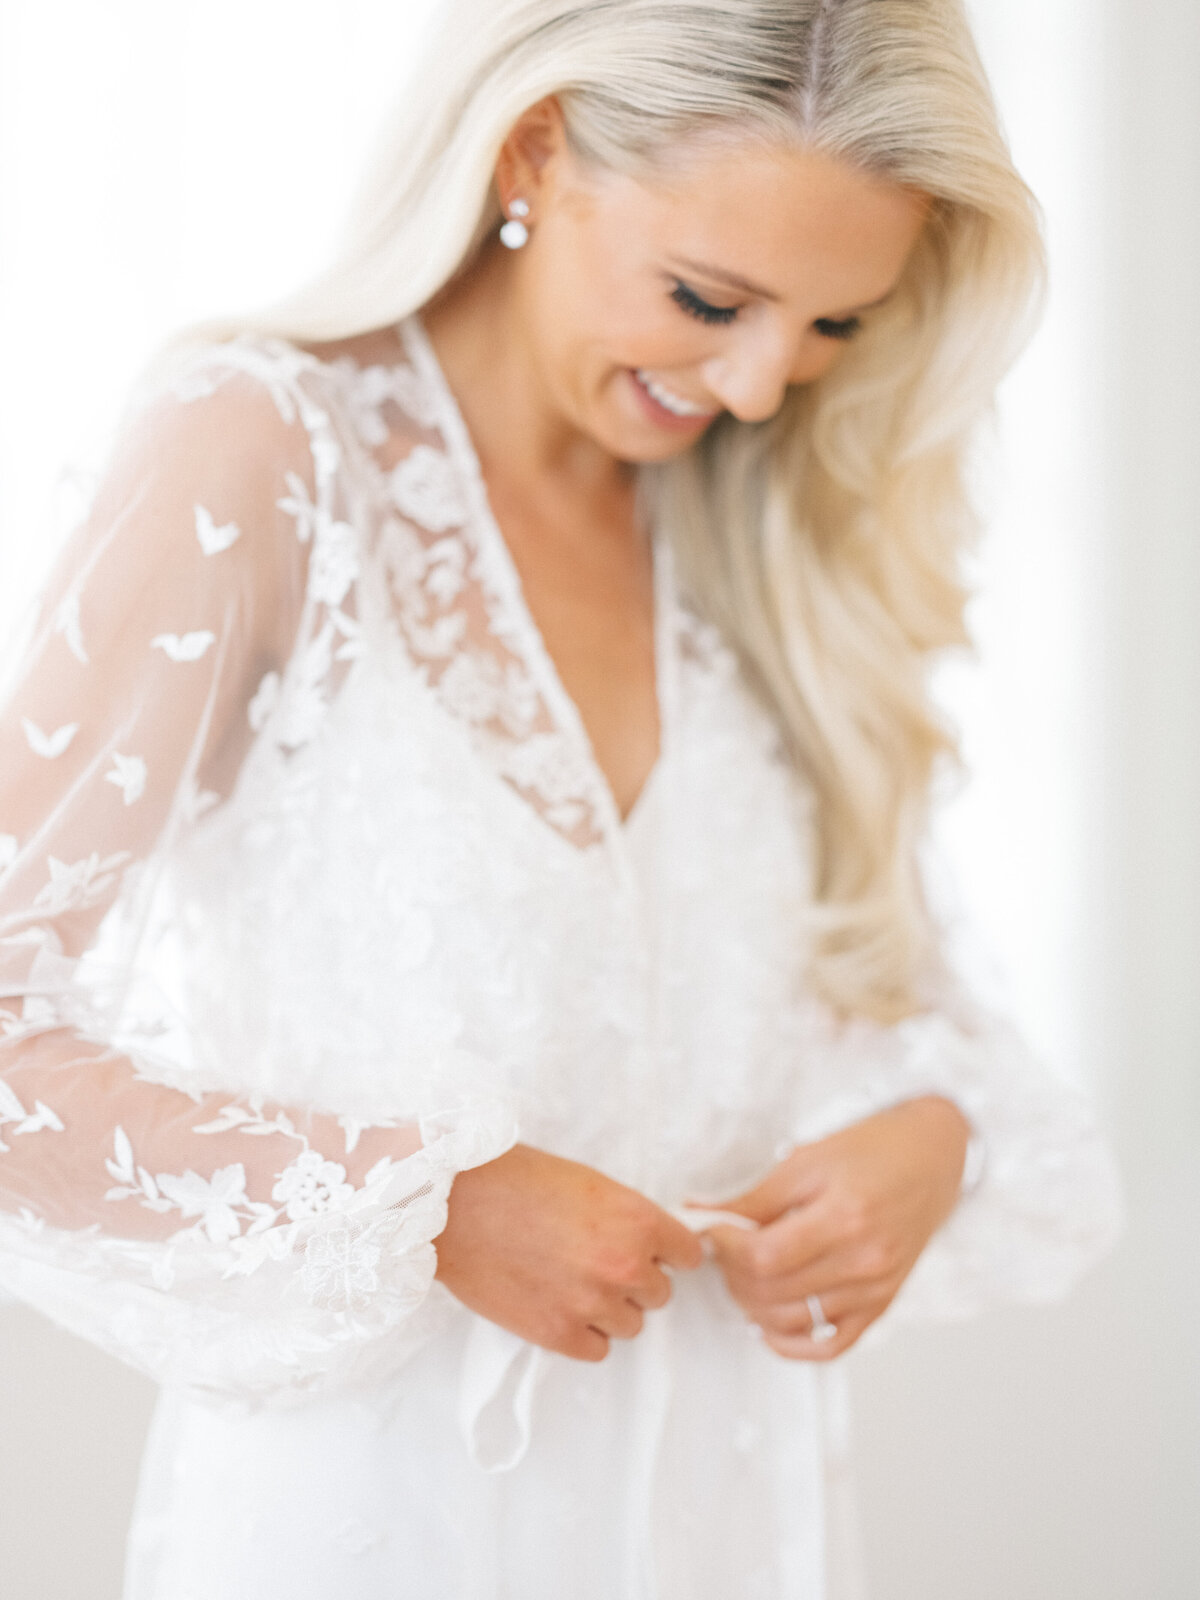 Jessica Blex - Midwest Wedding Photographer-3